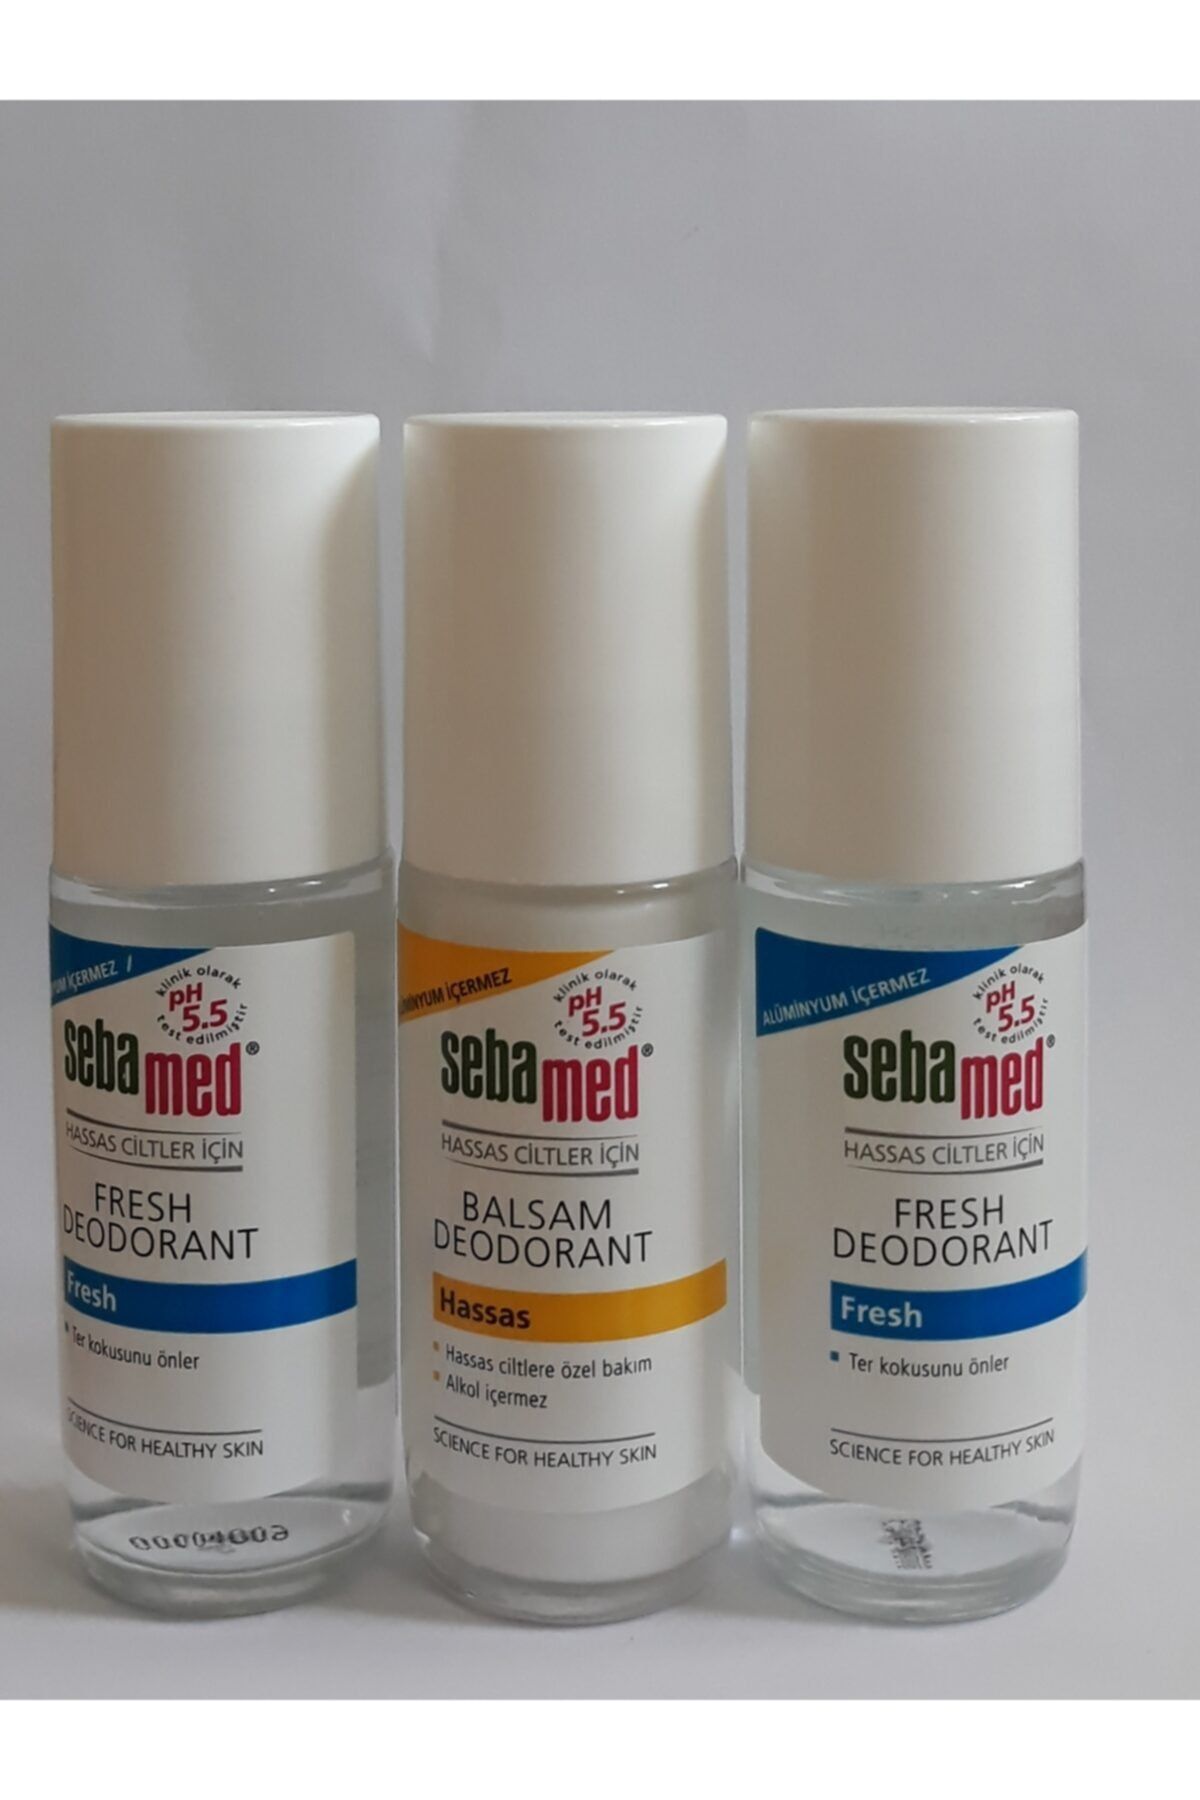 Sebamed Fresh Deodorant 2x50ml+hassas Ciltler Balsam Deodorant 1x50ml